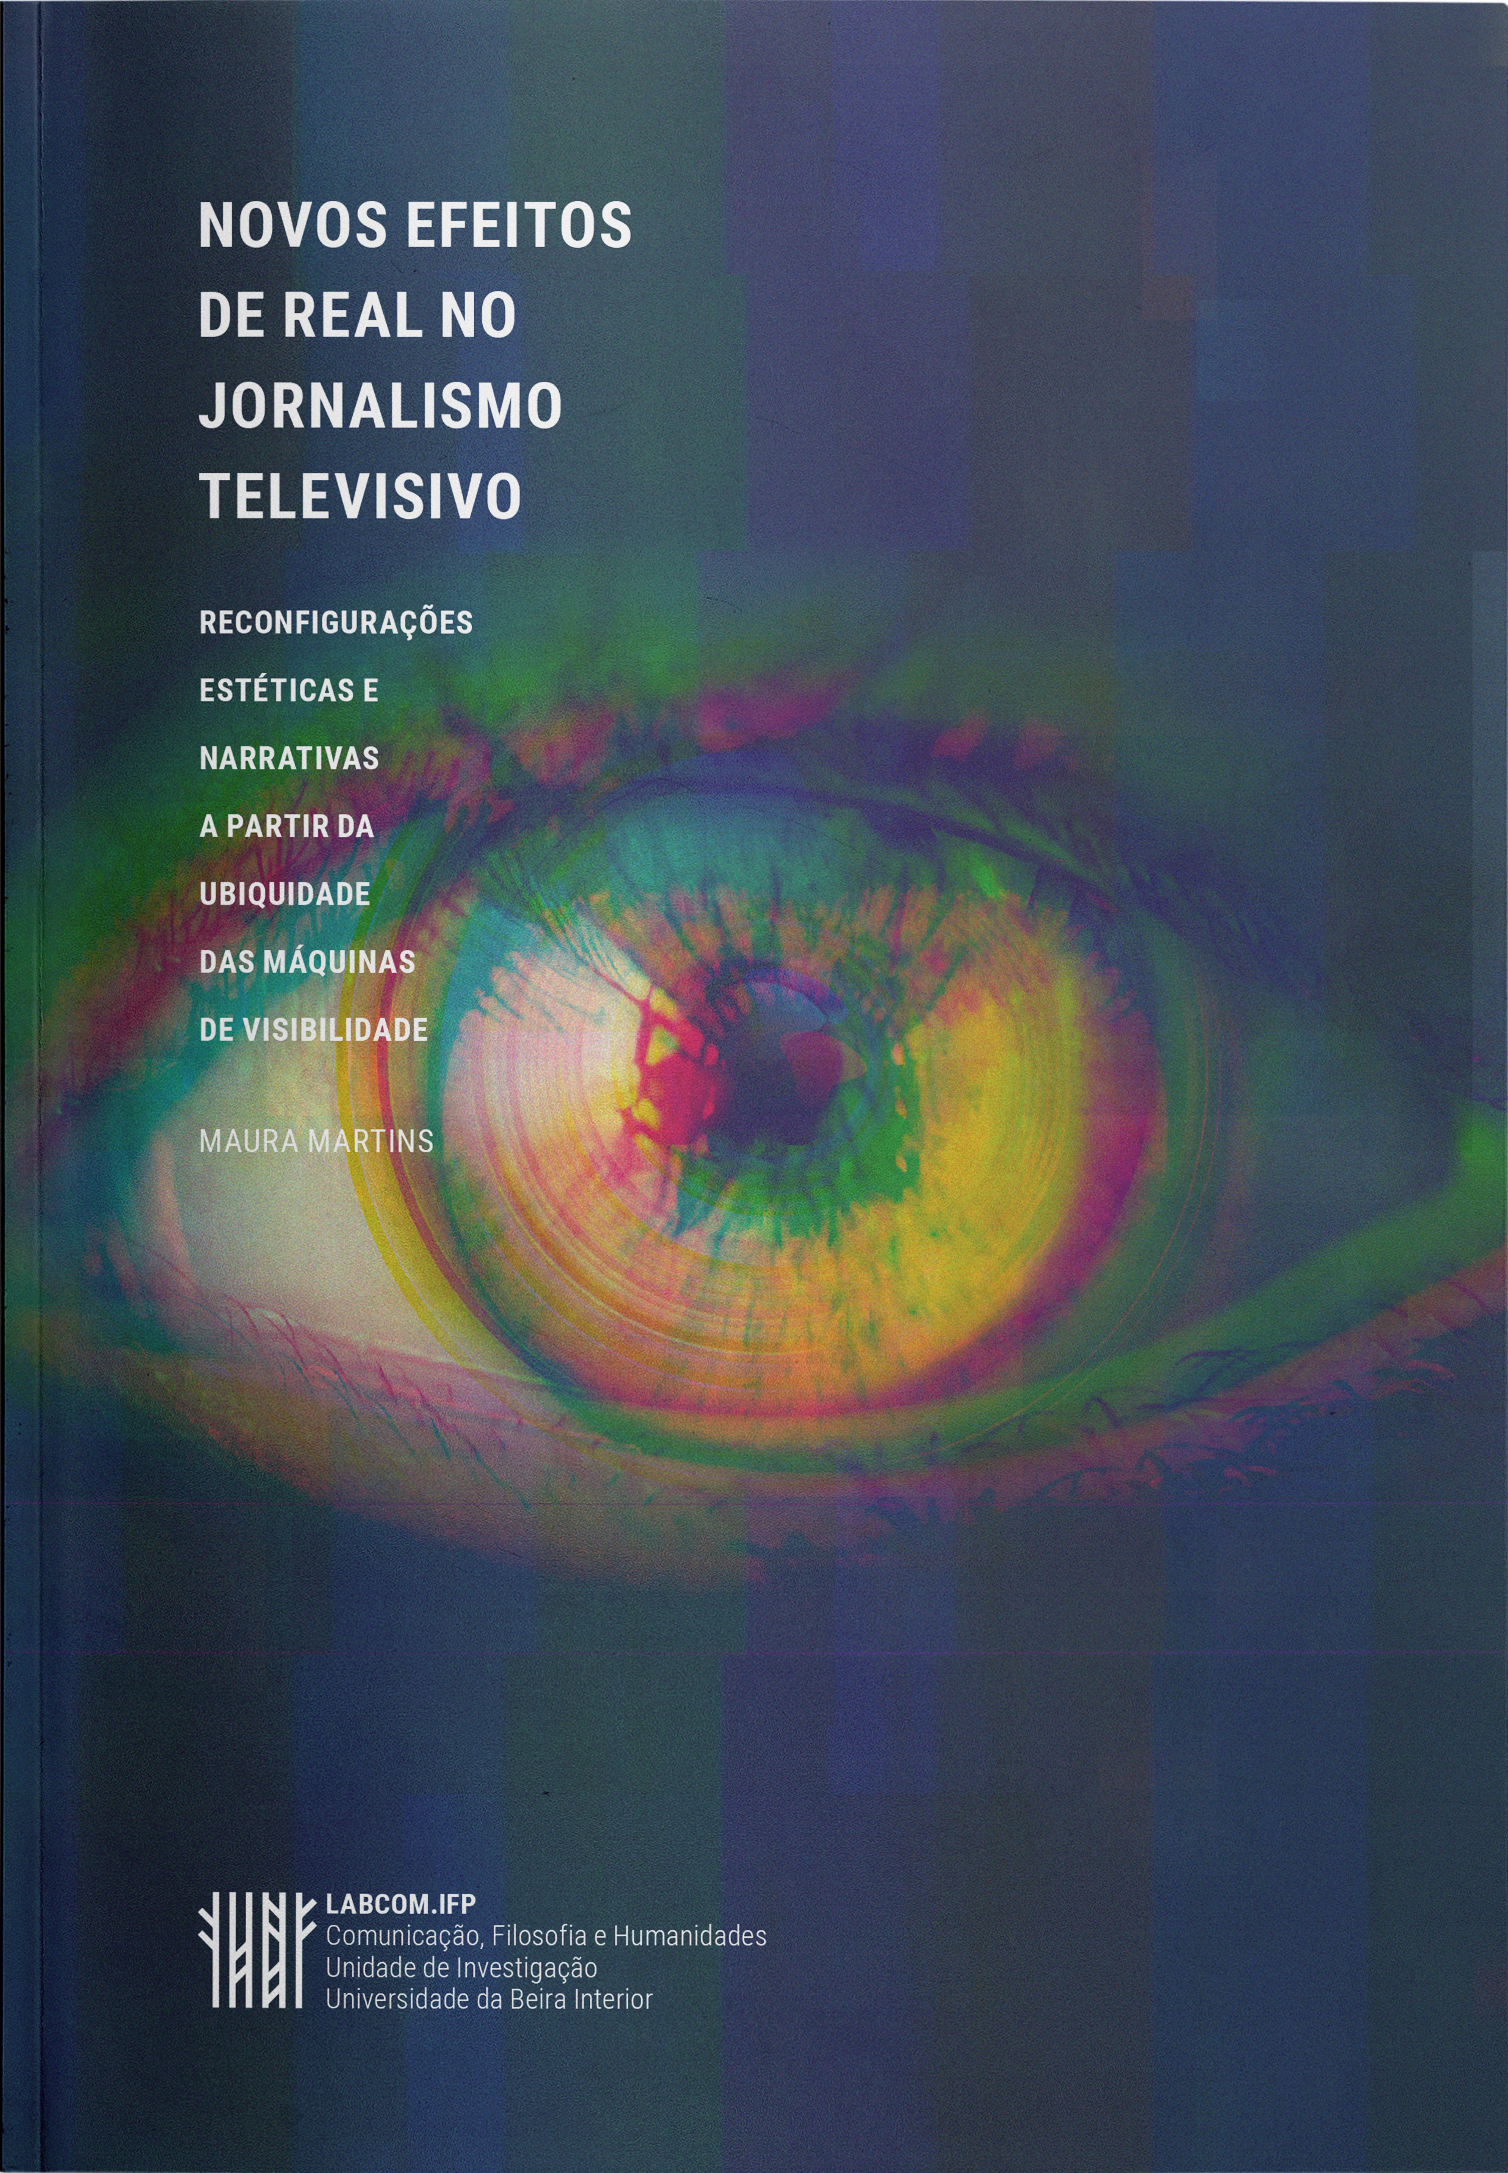 Capa: Maura Martins (2017) Novos efeitos de real no jornalismo televisivo. Communication  +  Philosophy  +  Humanities. .